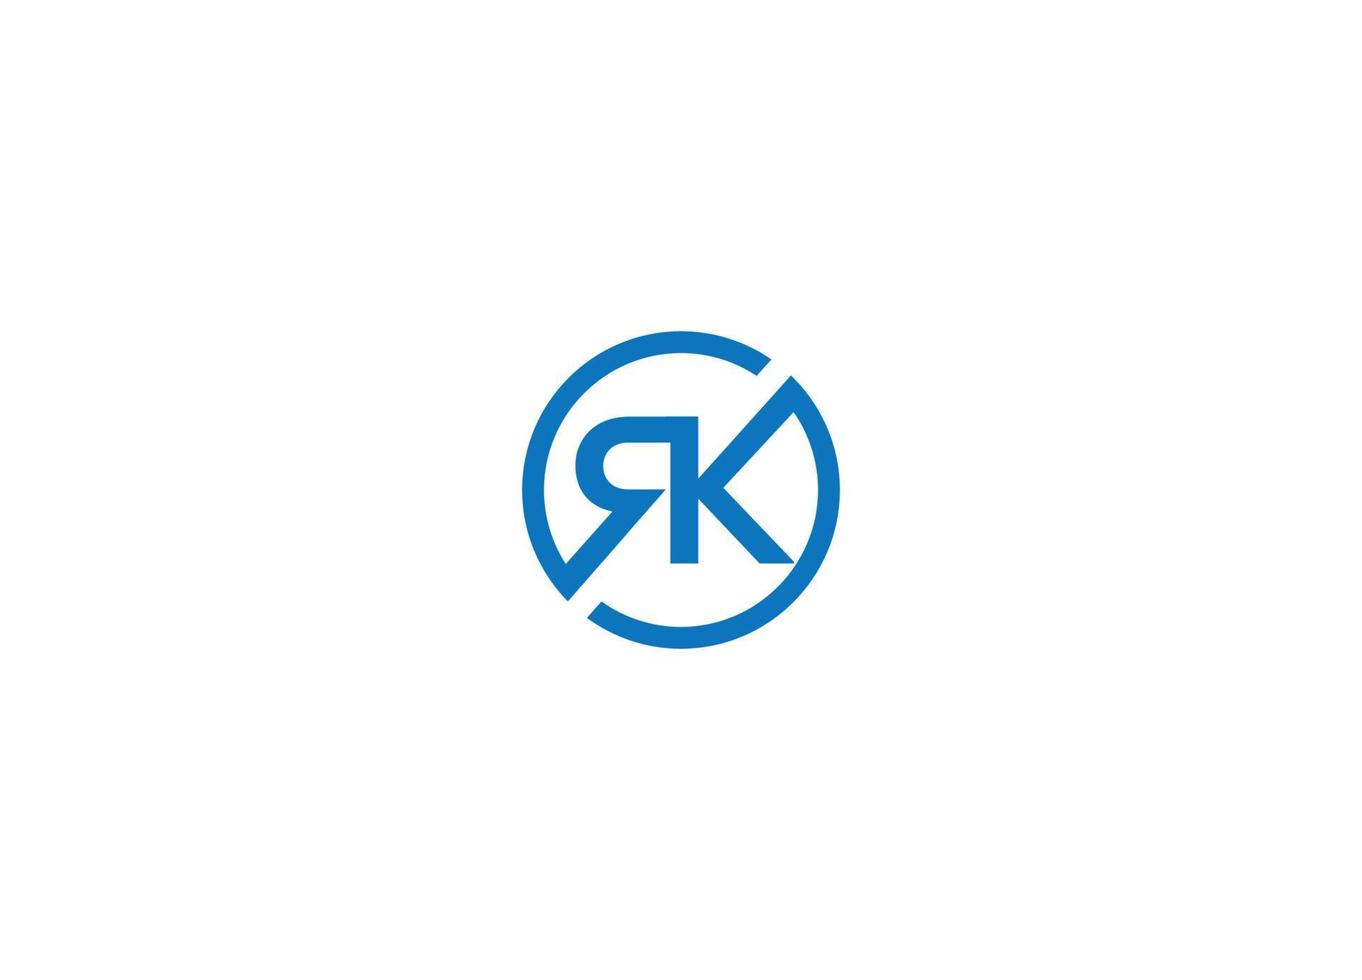 rk bokstav initial modern logotyp design vektor ikon mall